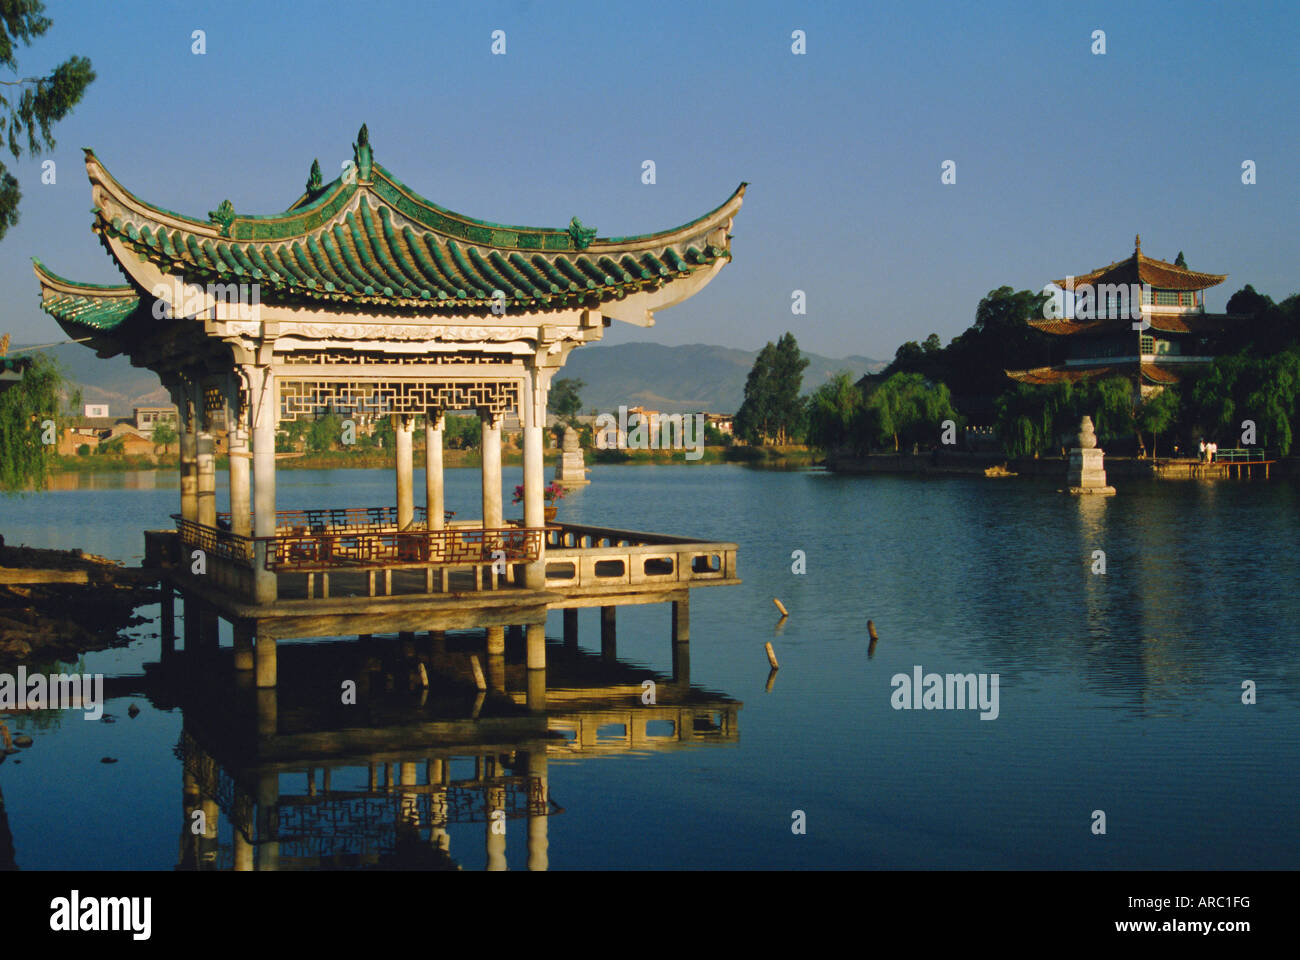 Pavilion and lake in a park, Kunming, Yunnan Province, China Stock Photo